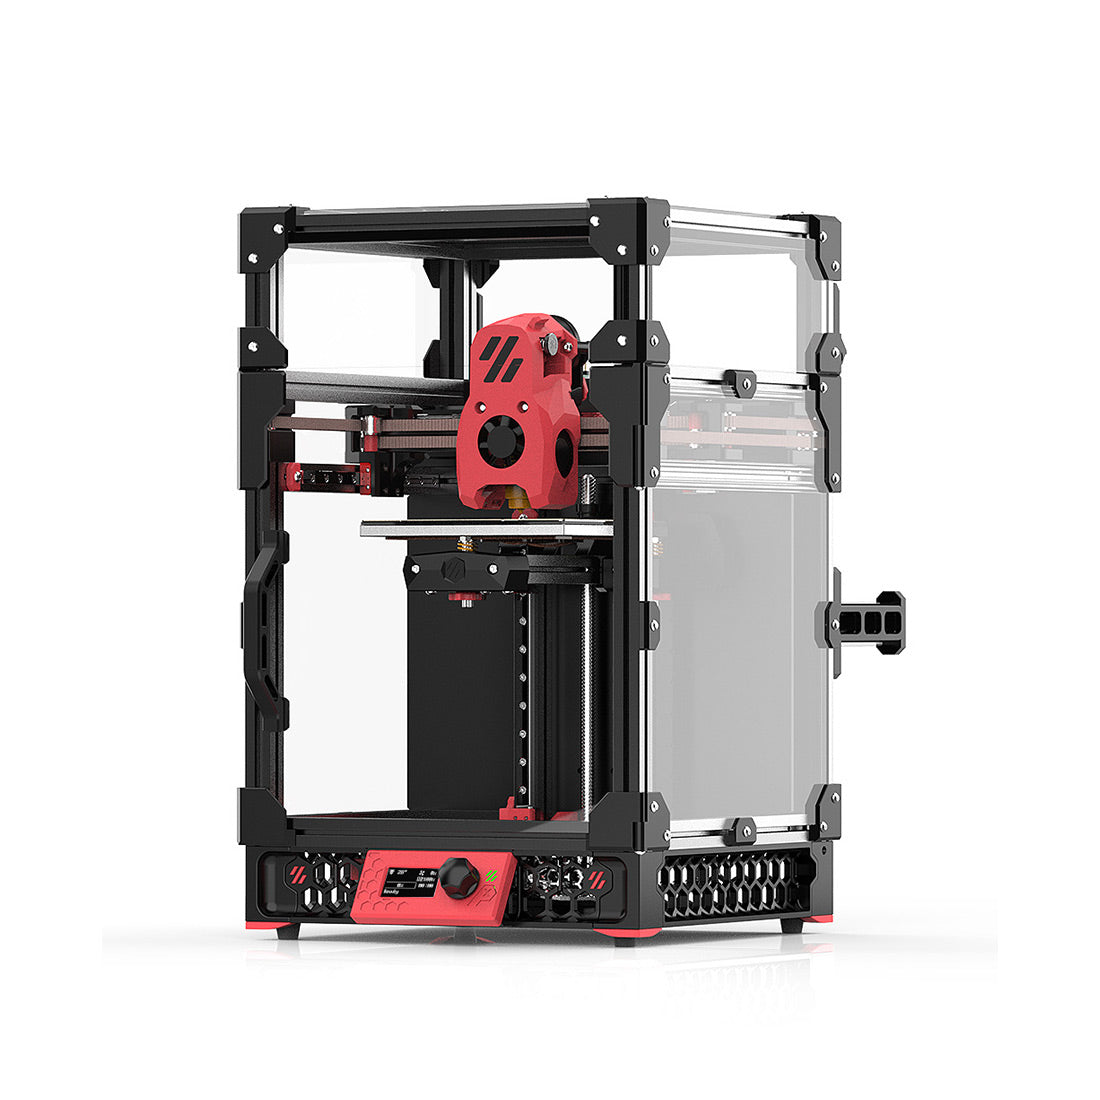 Voron 0.2 R1 3D Printer Kit Build your own DIY 3D Printer